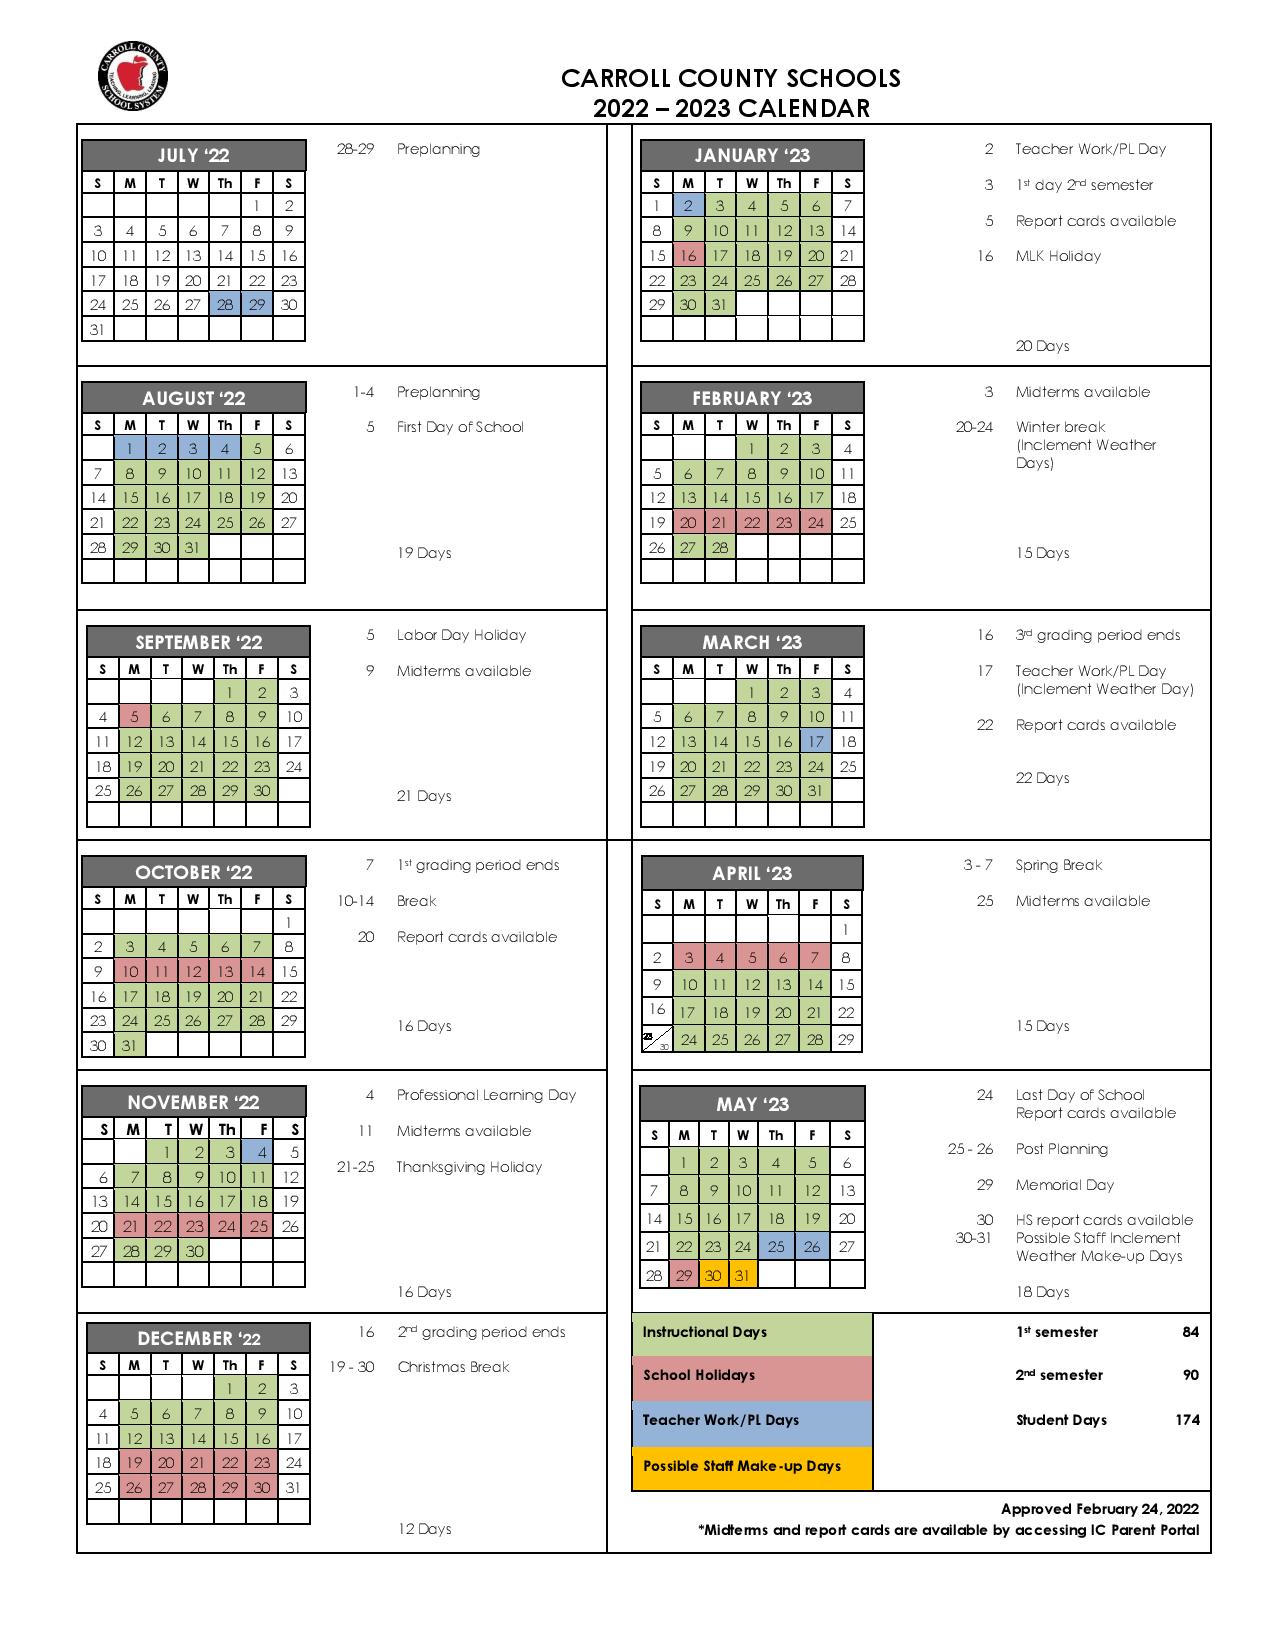 Carroll County Schools Calendar 20222023 in PDF